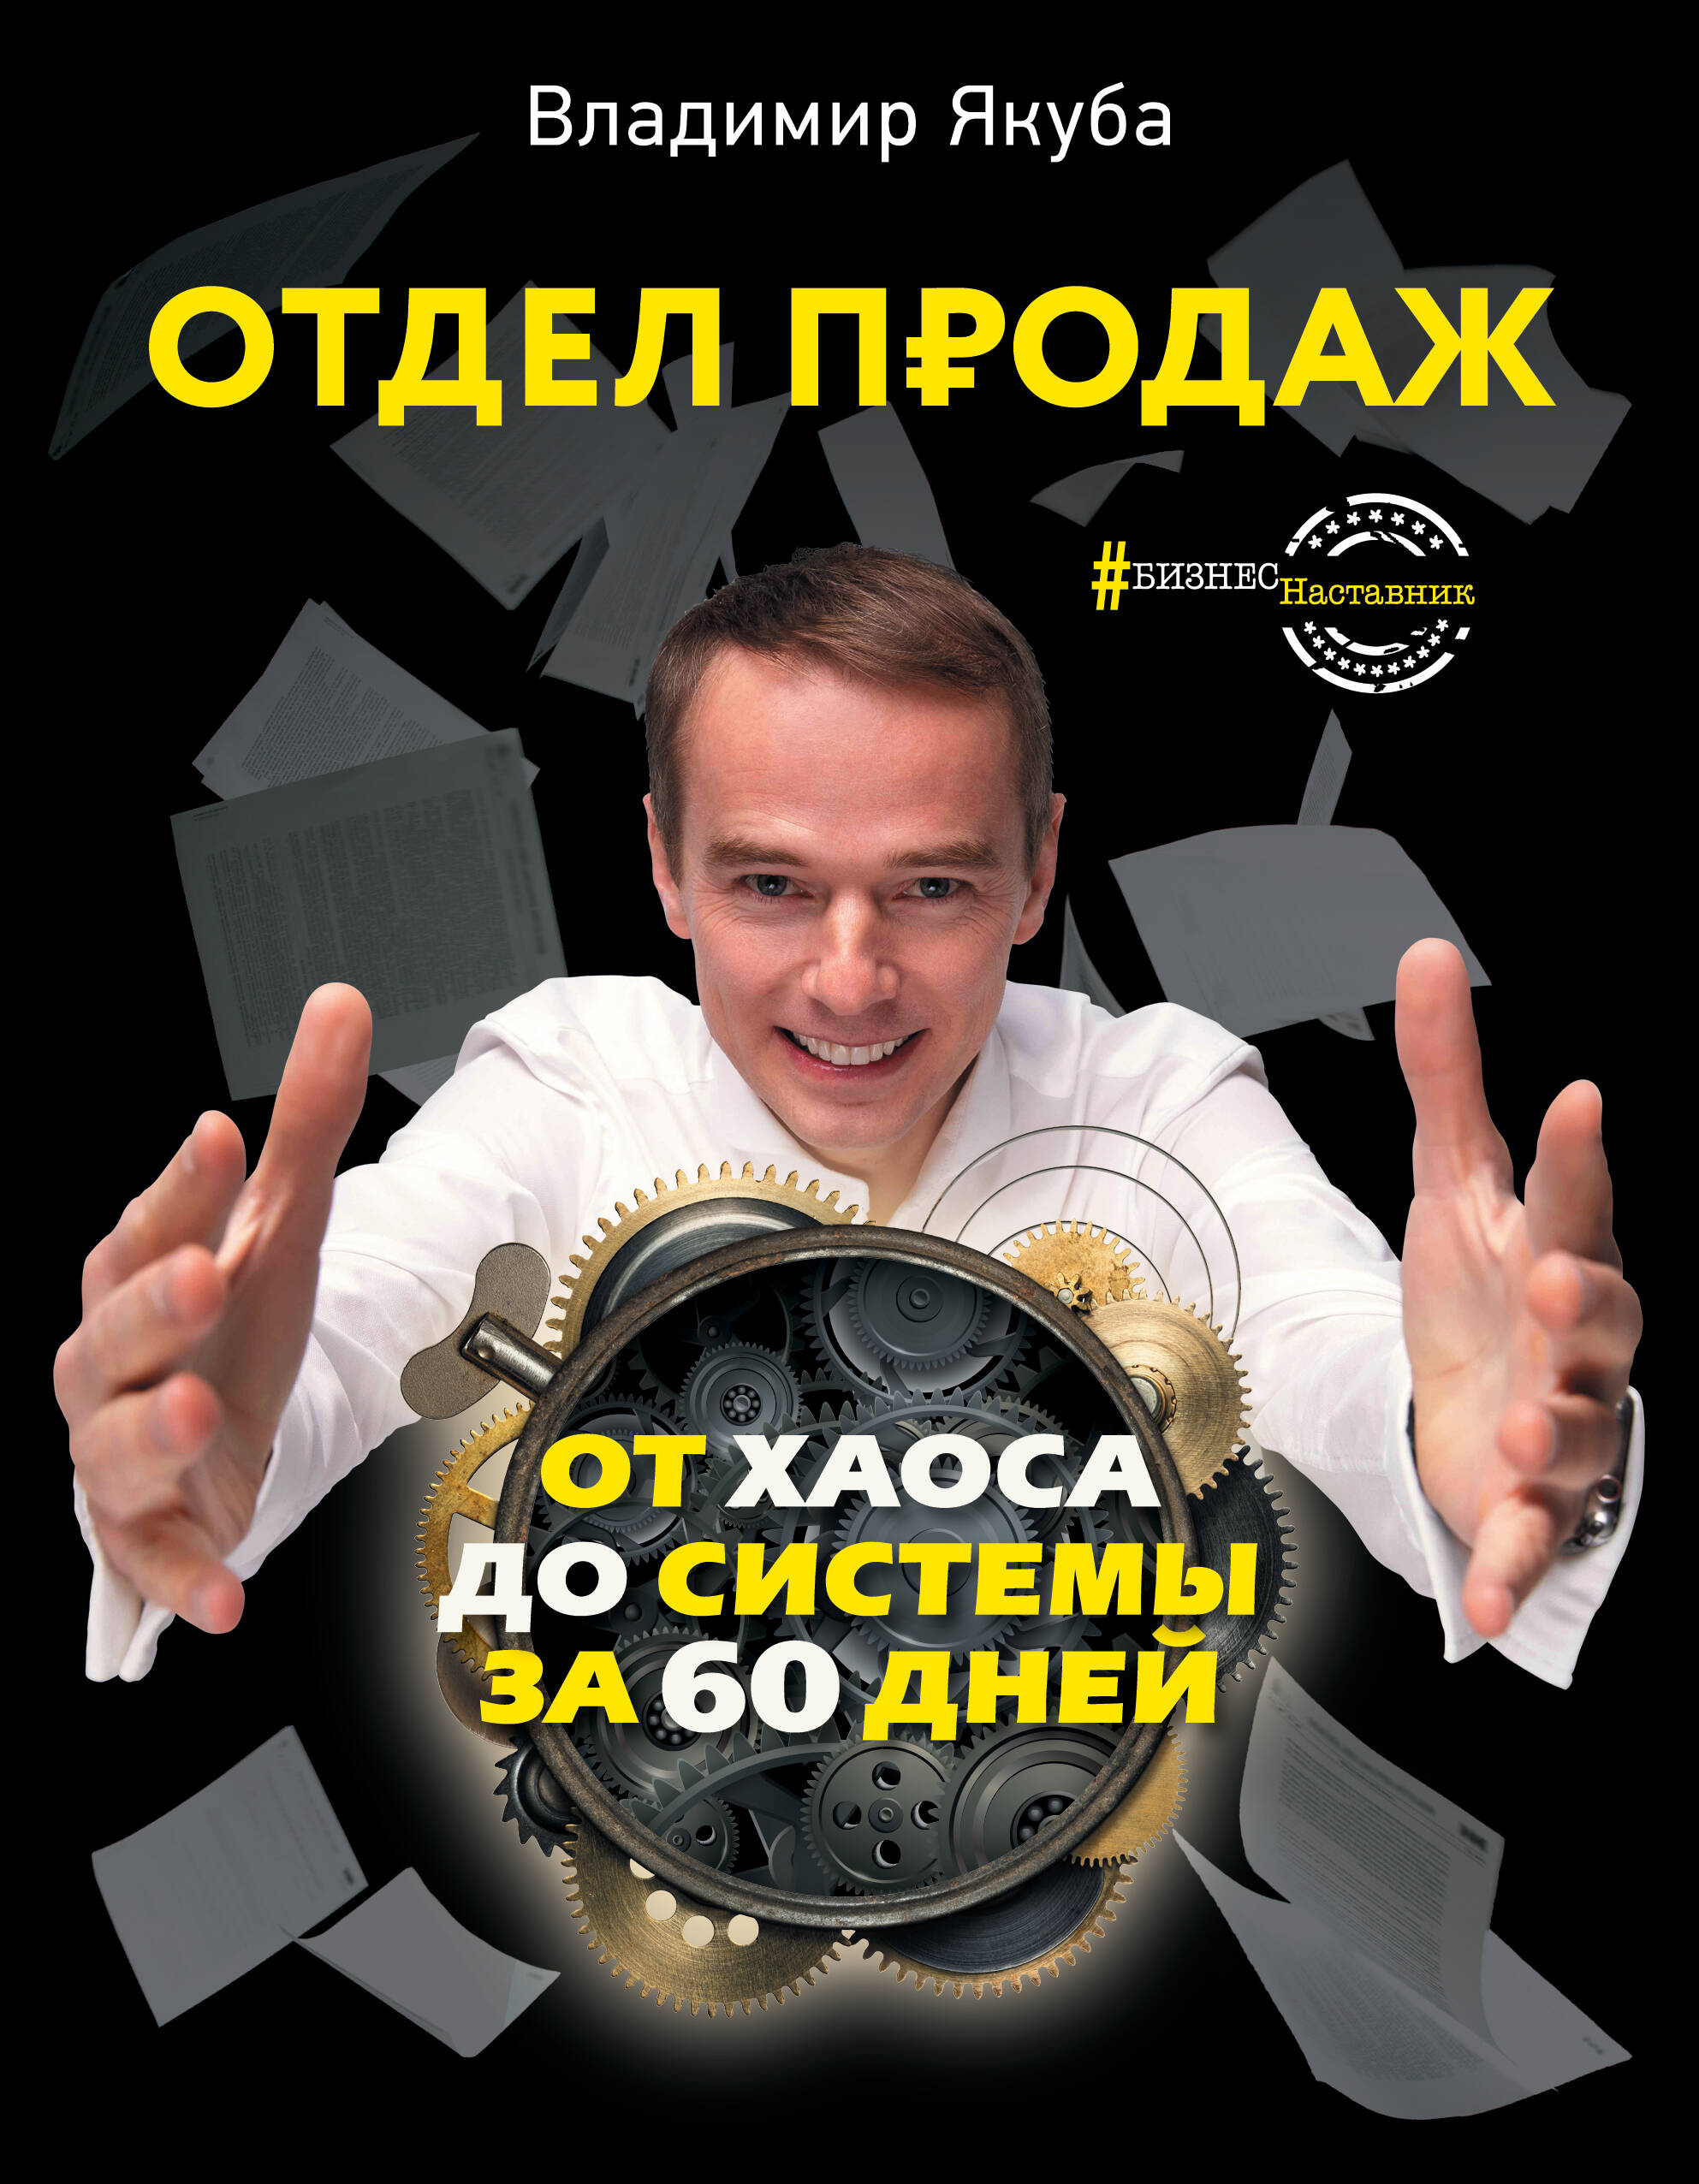 Якуба Владимир Александрович Отдел продаж: от хаоса до системы за 60 дней - страница 0